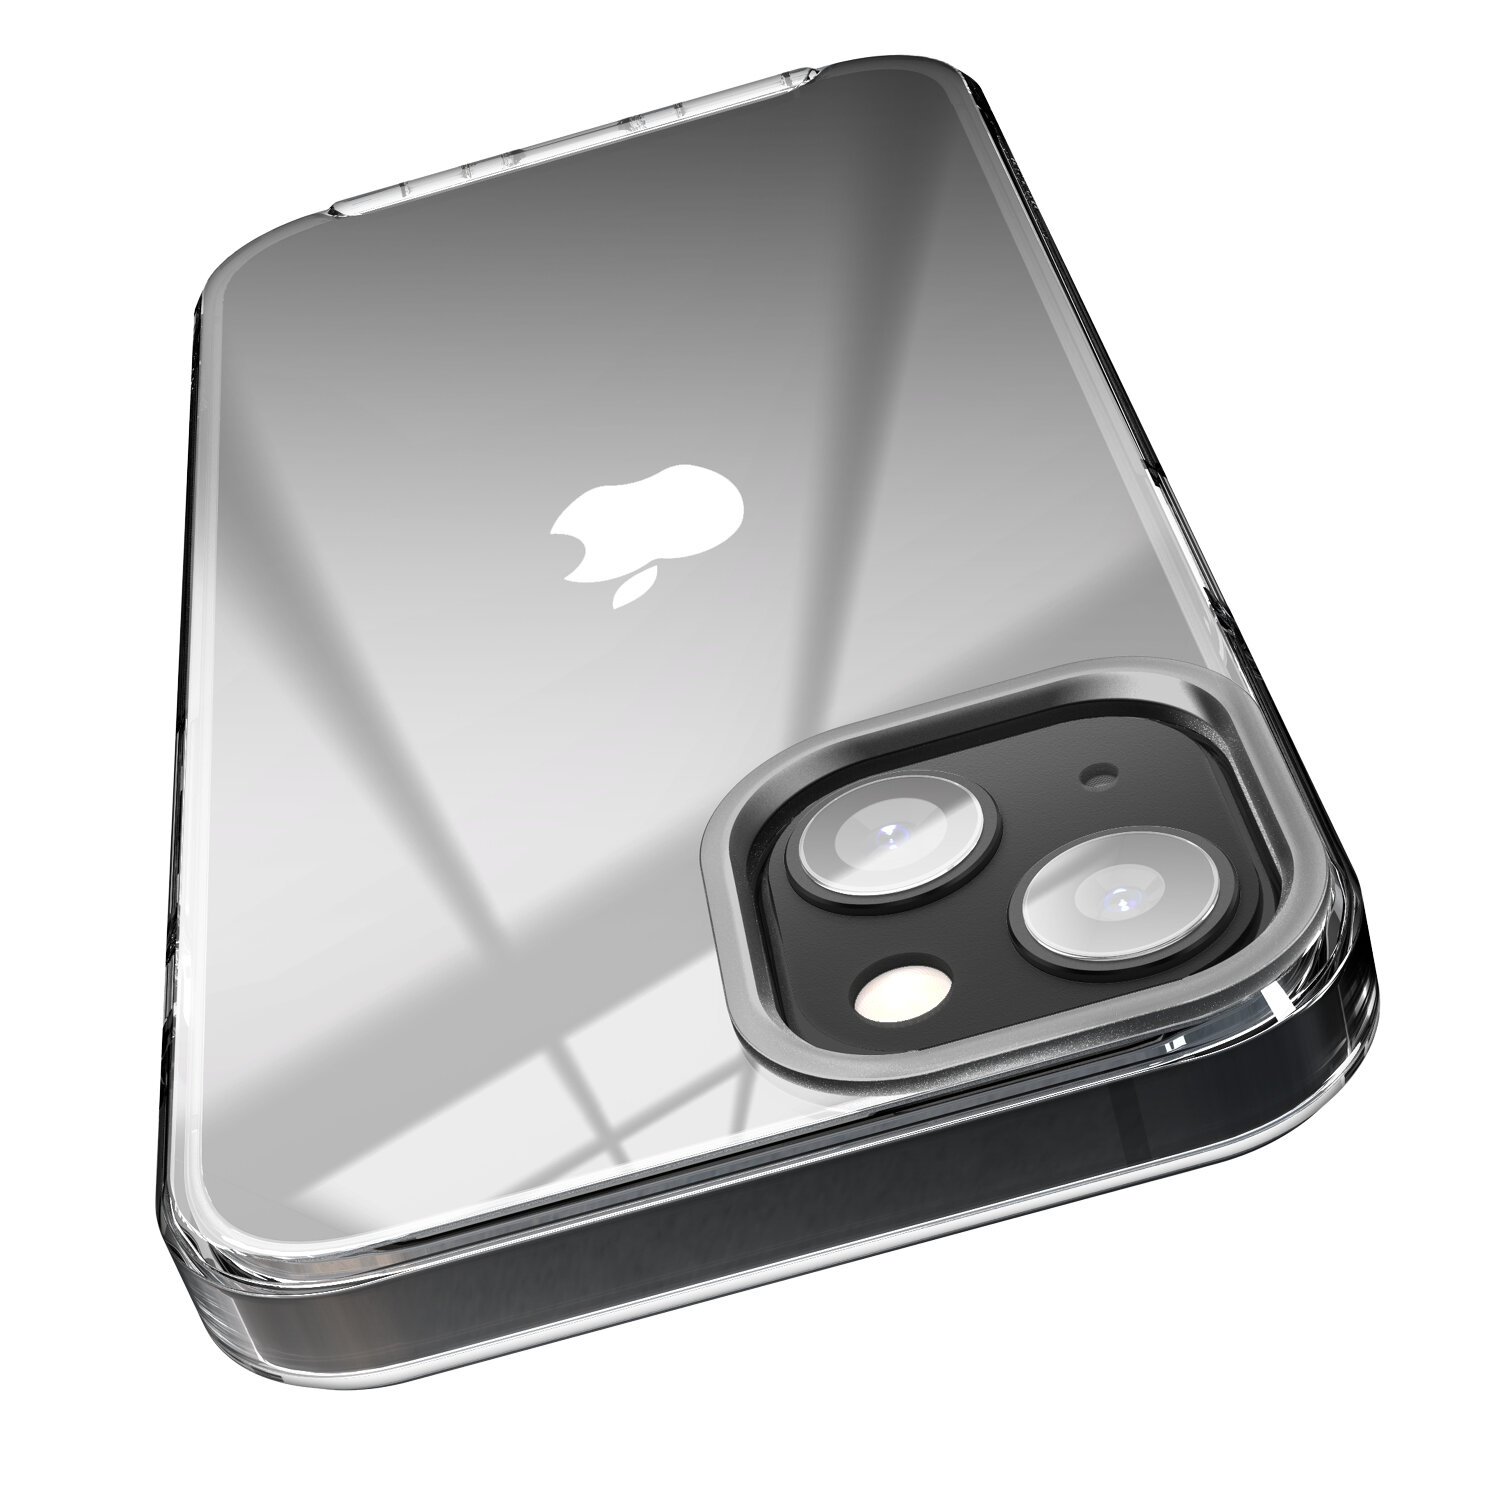 Elago iPhone 13 Hybrid Case - Clear		 		